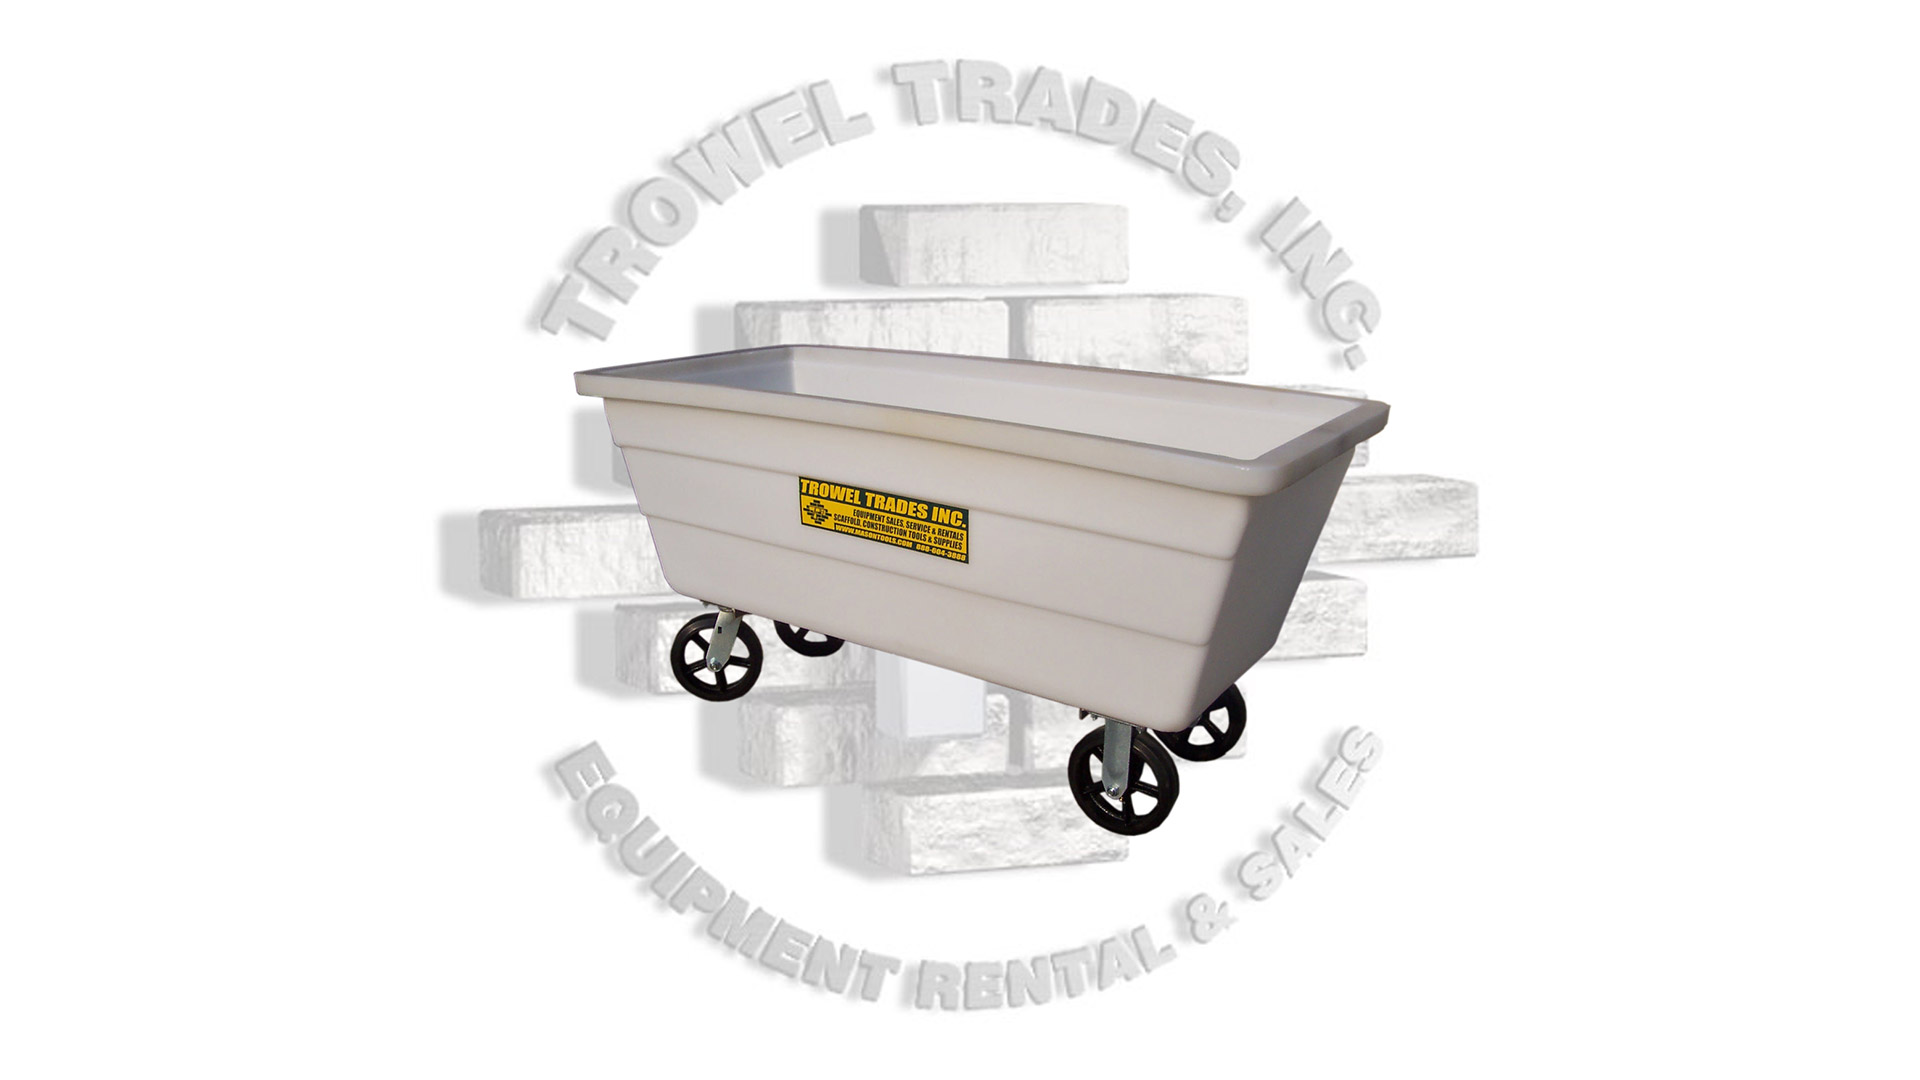 Trowel Trades, Inc. Rolling Mud Tub Poly Mortar Box with Wheels (Lot 1 of 3)